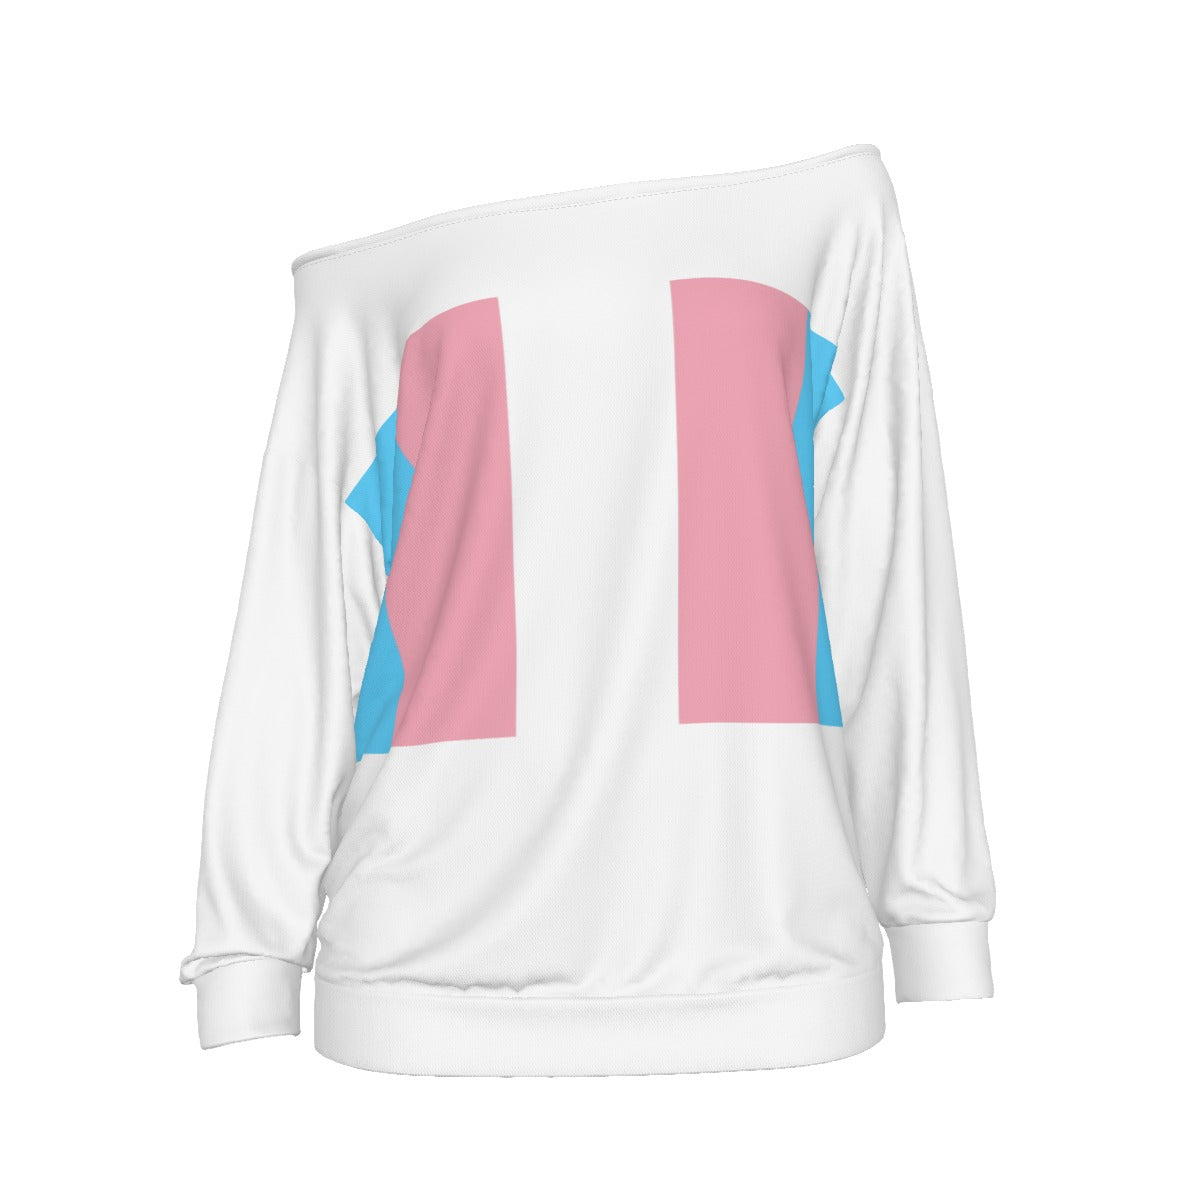 Teen - Plus Size Blue Pink White Trans Pride Off-Shoulder Sweatshirt